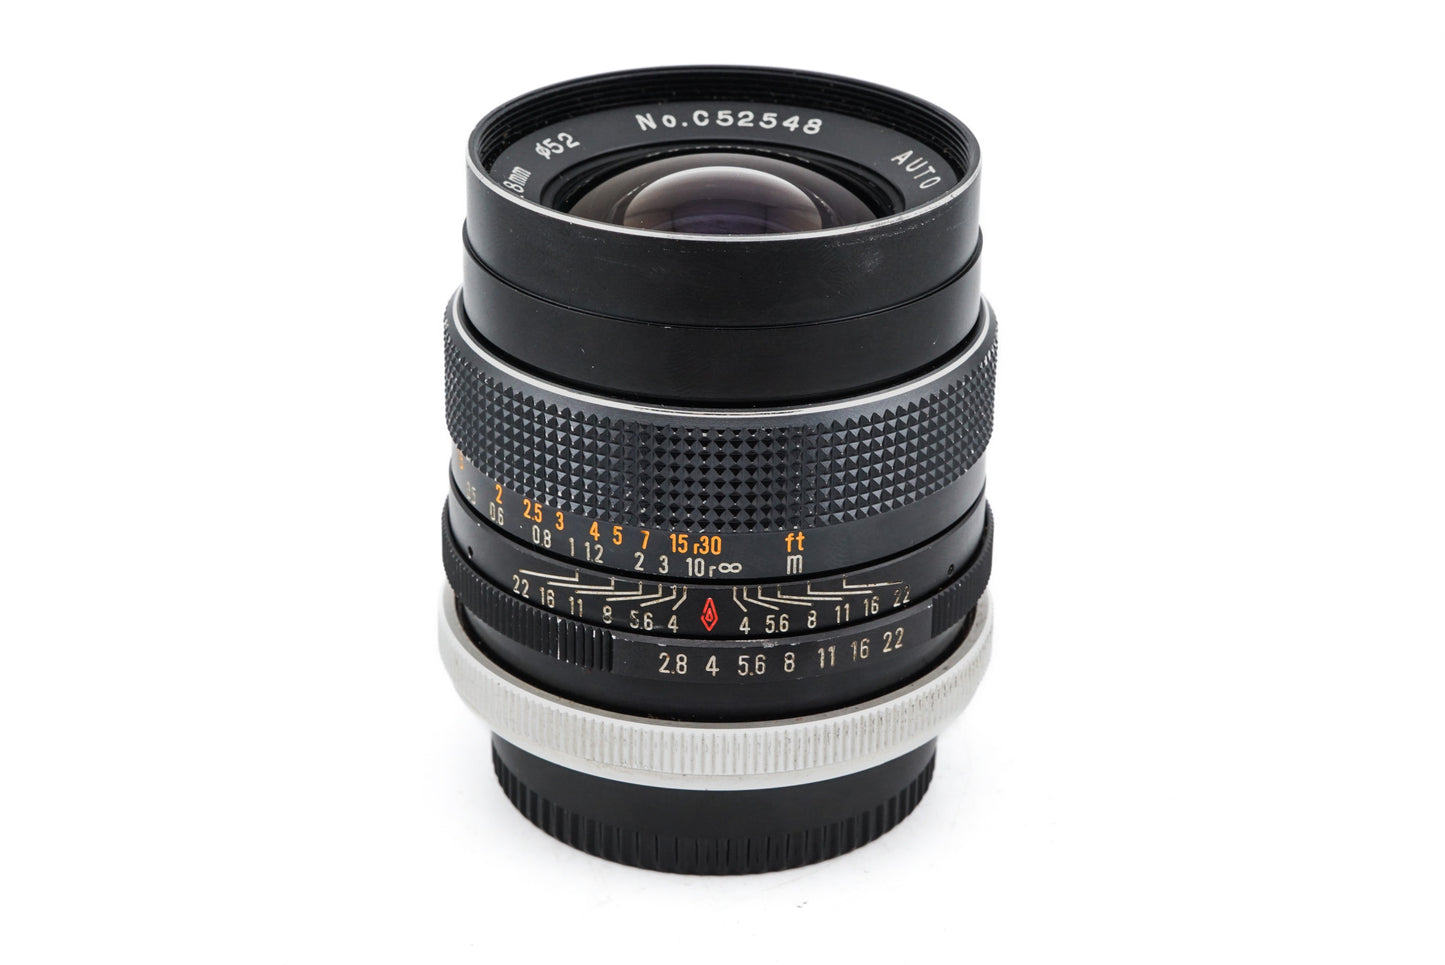 Raynox 28mm f2.8 Auto Ww - Lens